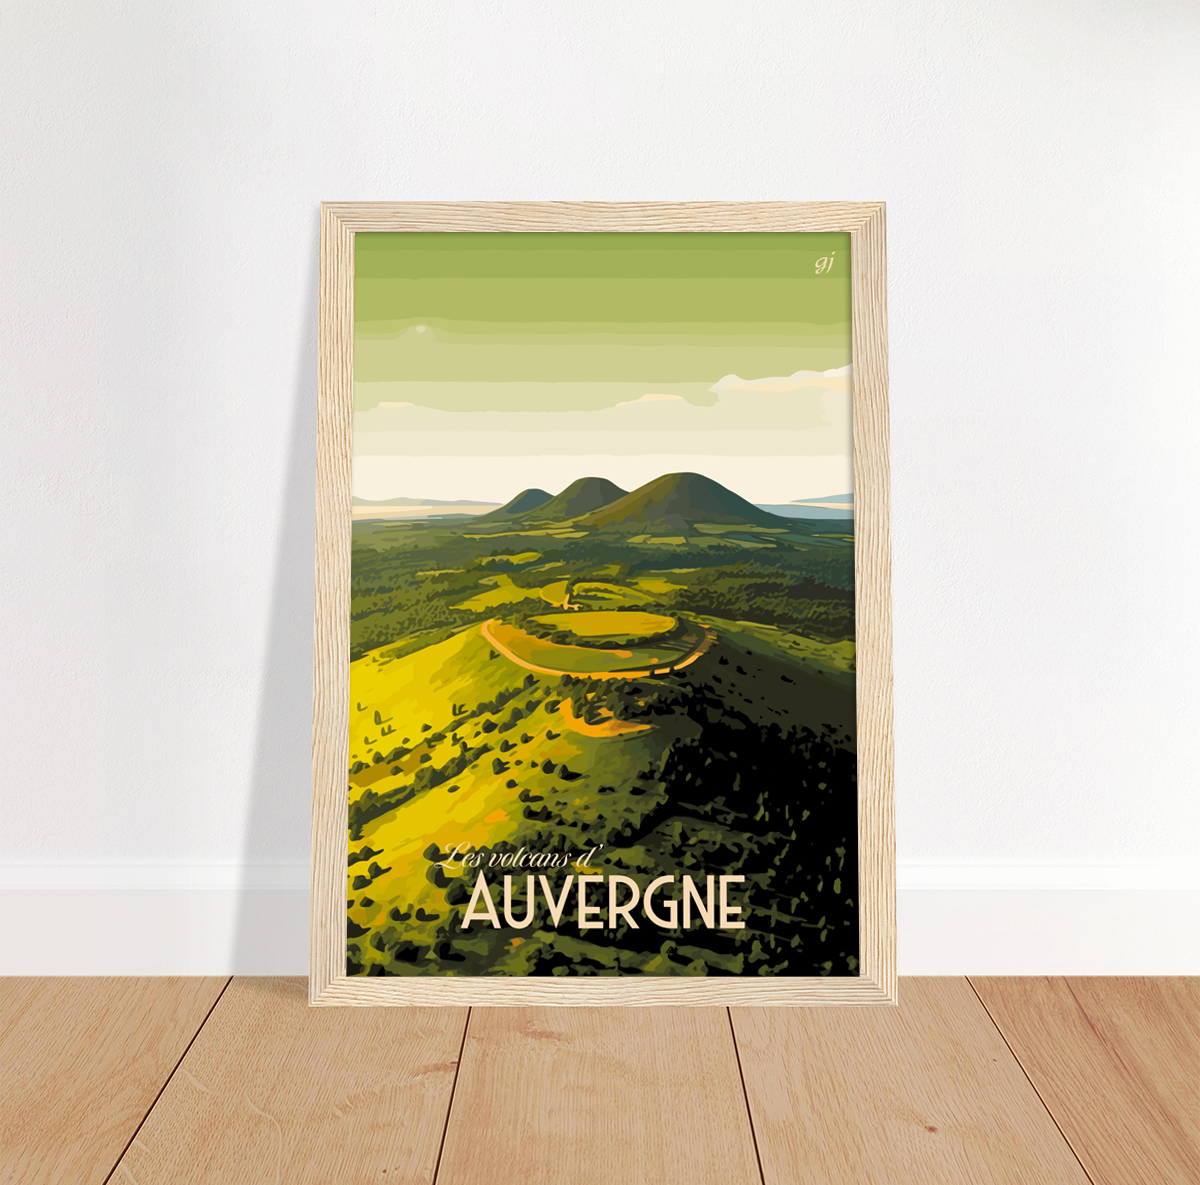 Auvergne poster by bon voyage design